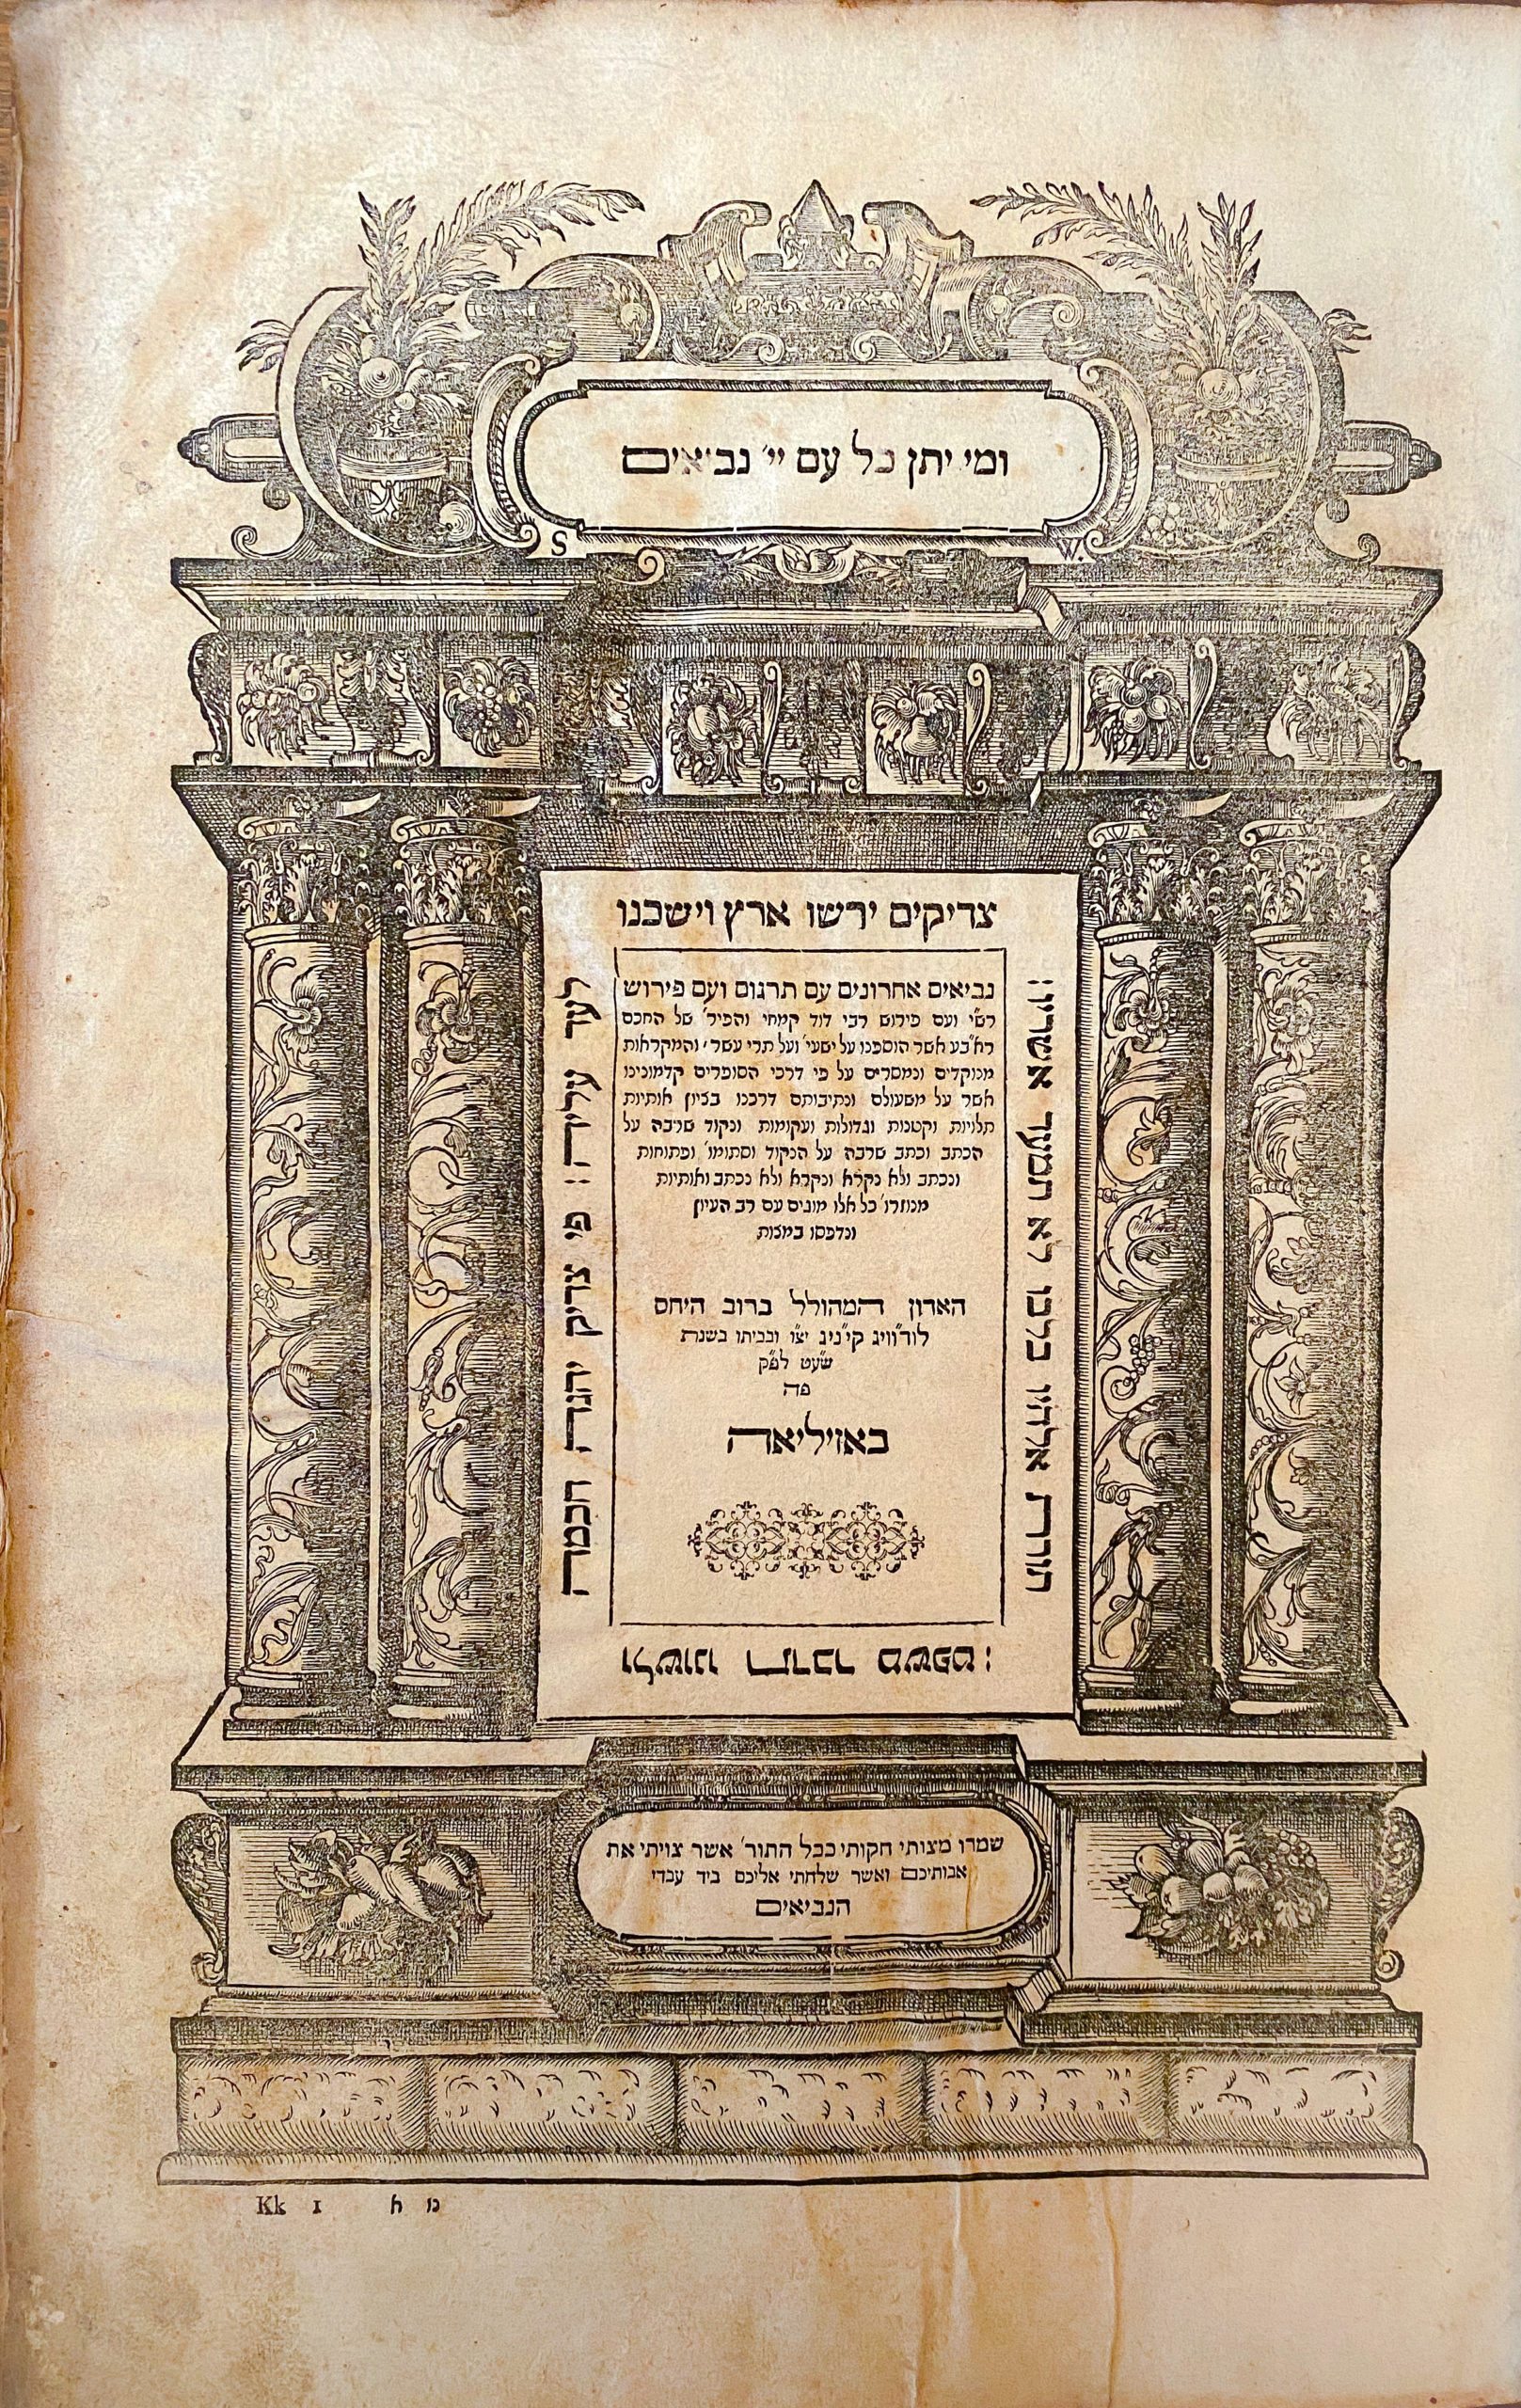 Biblia Hebraica cum Paraphr. Chald. et Commentariis Rabbinorum de Johannes Buxtorf